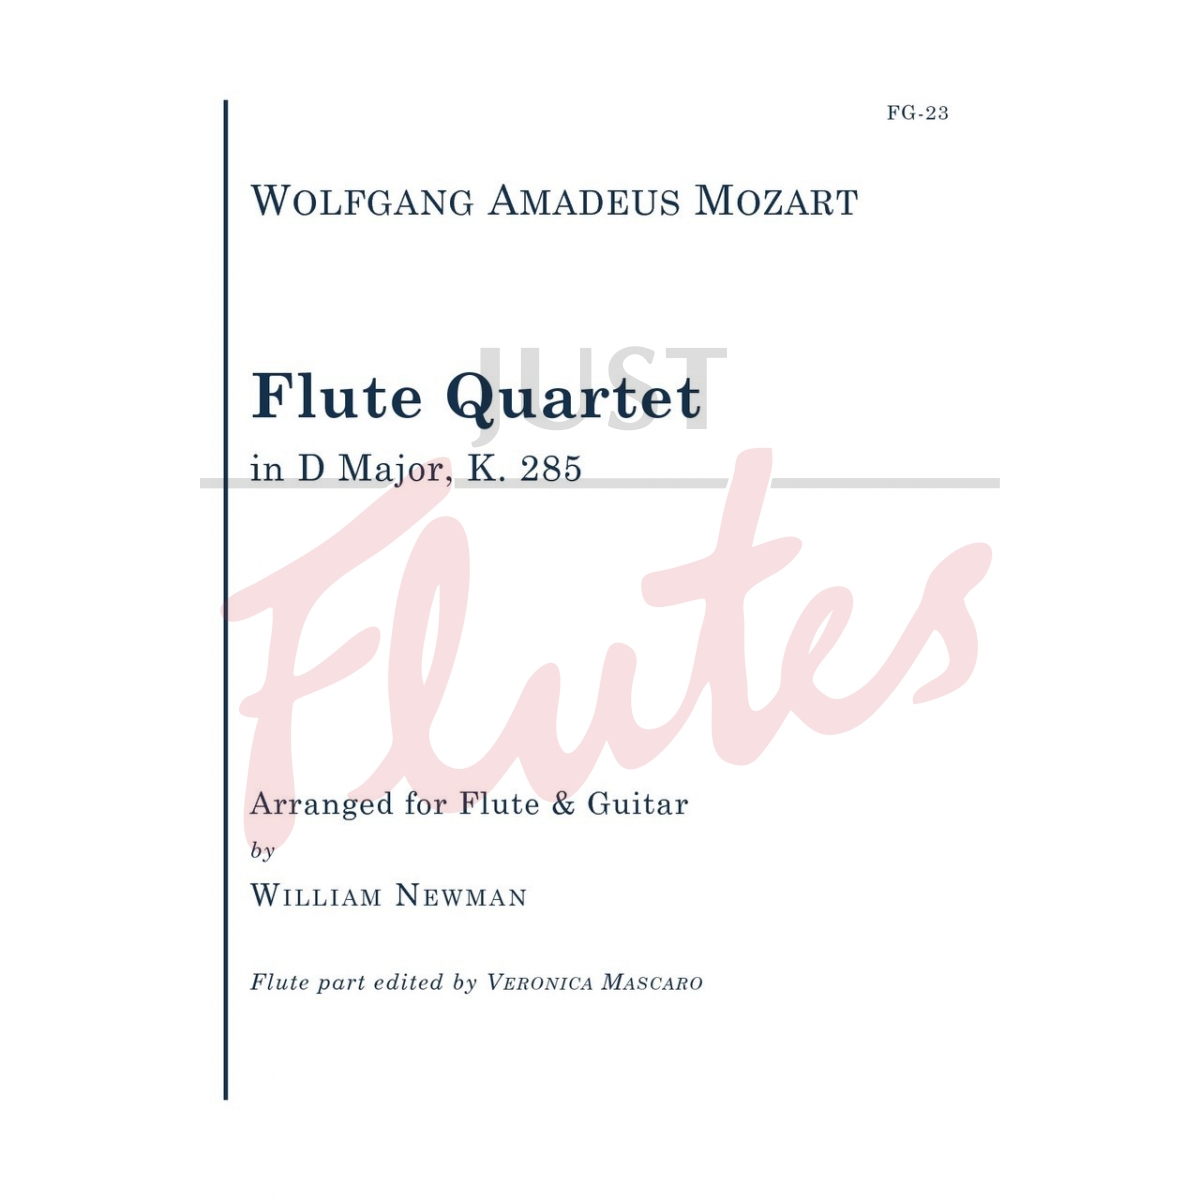 Flute Quartet in D major